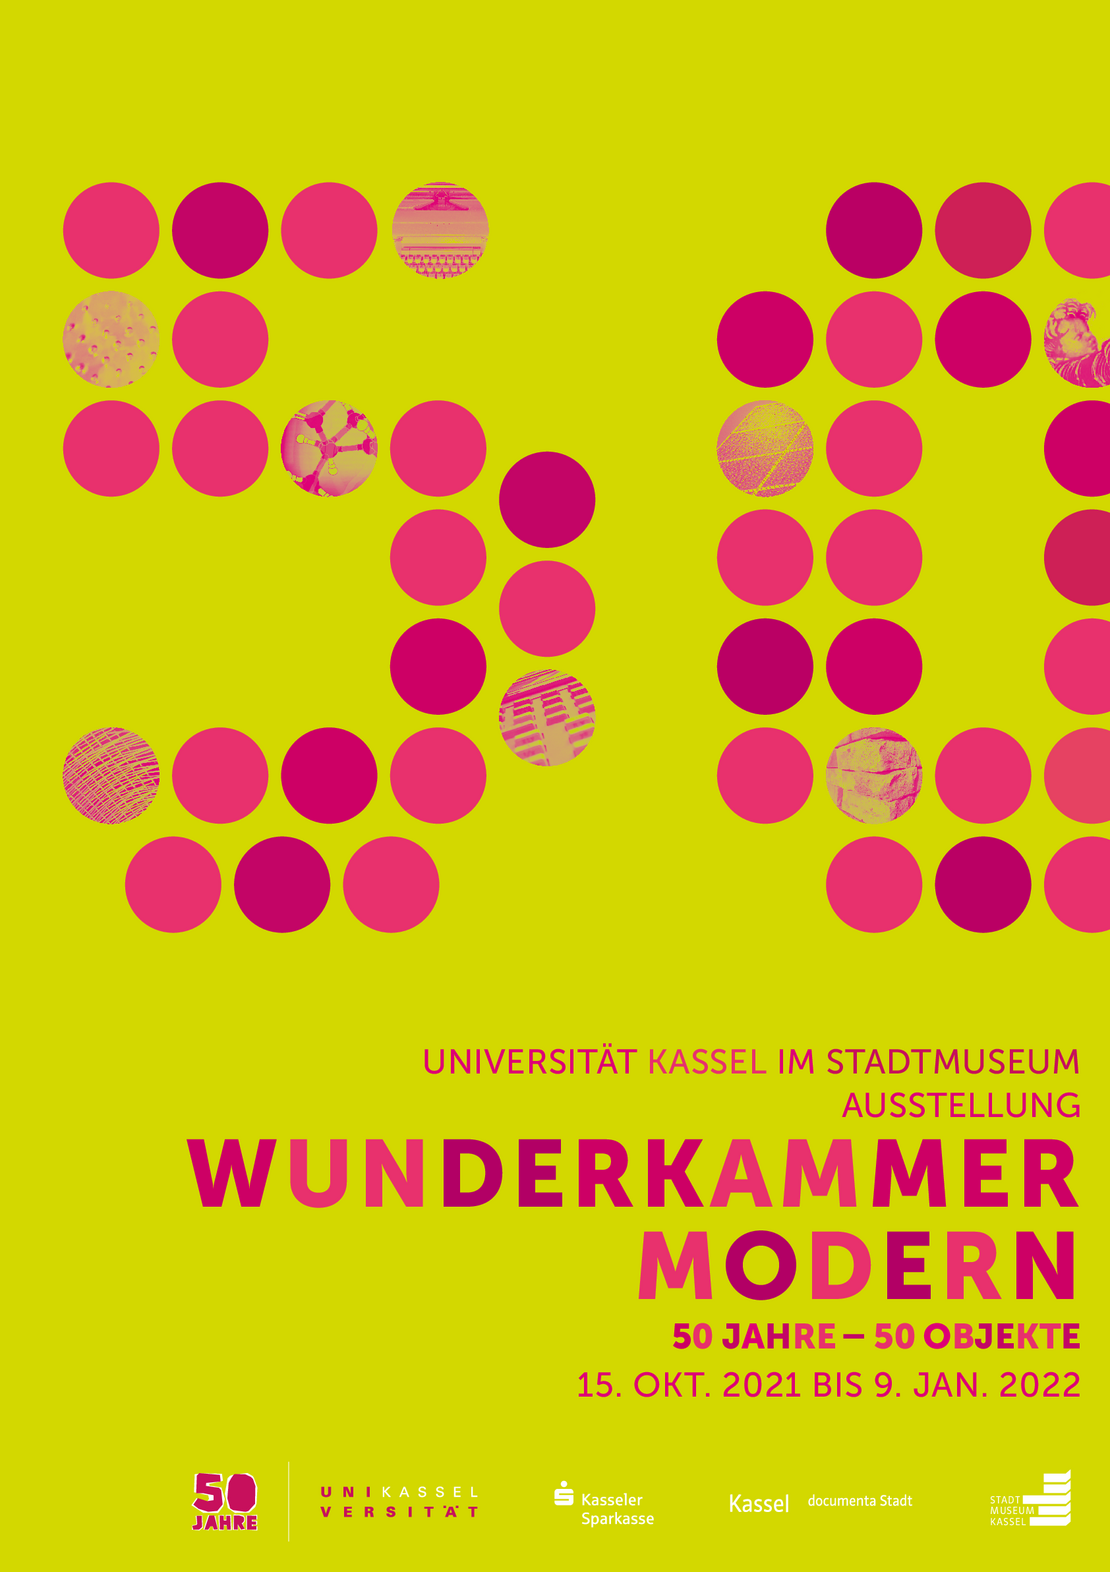 Cartel de la exposición: Universität Kassel im Stadtmuseum Exposición WUNDERKAMMER MODERN 50 JAHR - 50 OBJEKTE 15 OKT. 2021 hasta el 9 ENE. 2022